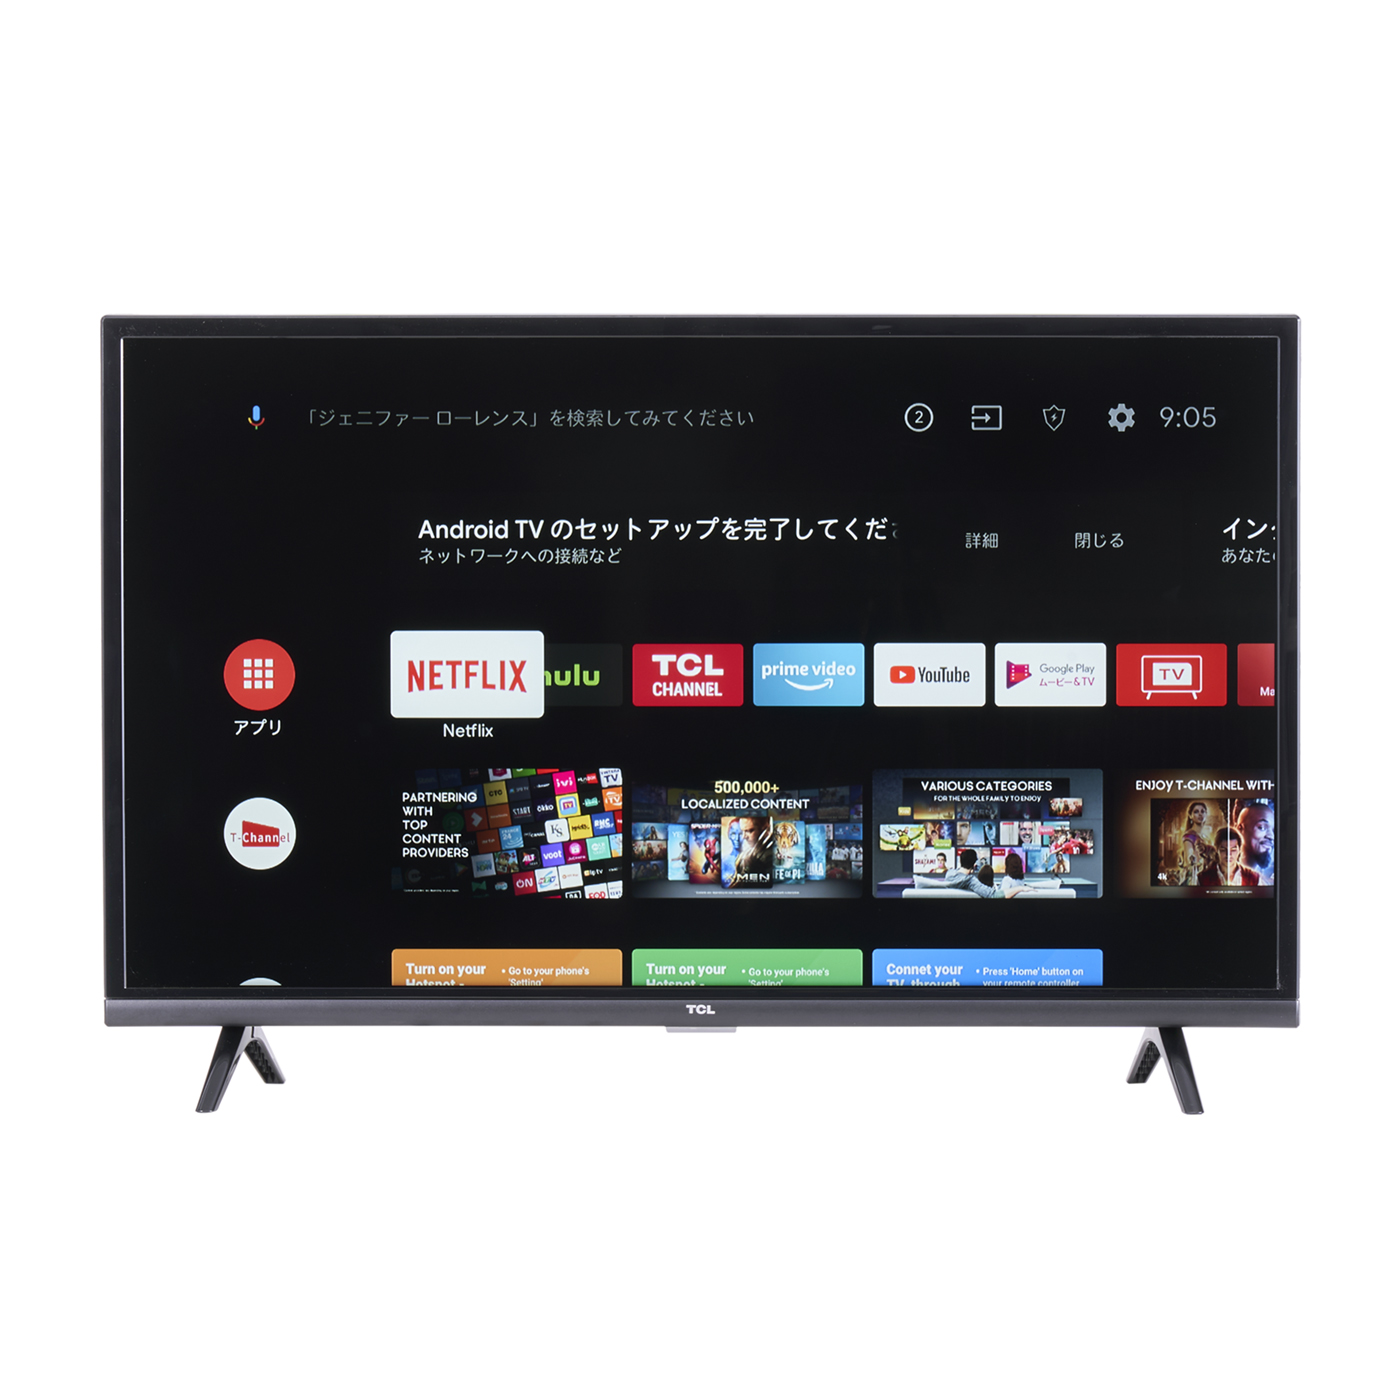 TCL 32v型 AndroidTV 液晶テレビ「32S515」 リモコン有 - テレビ